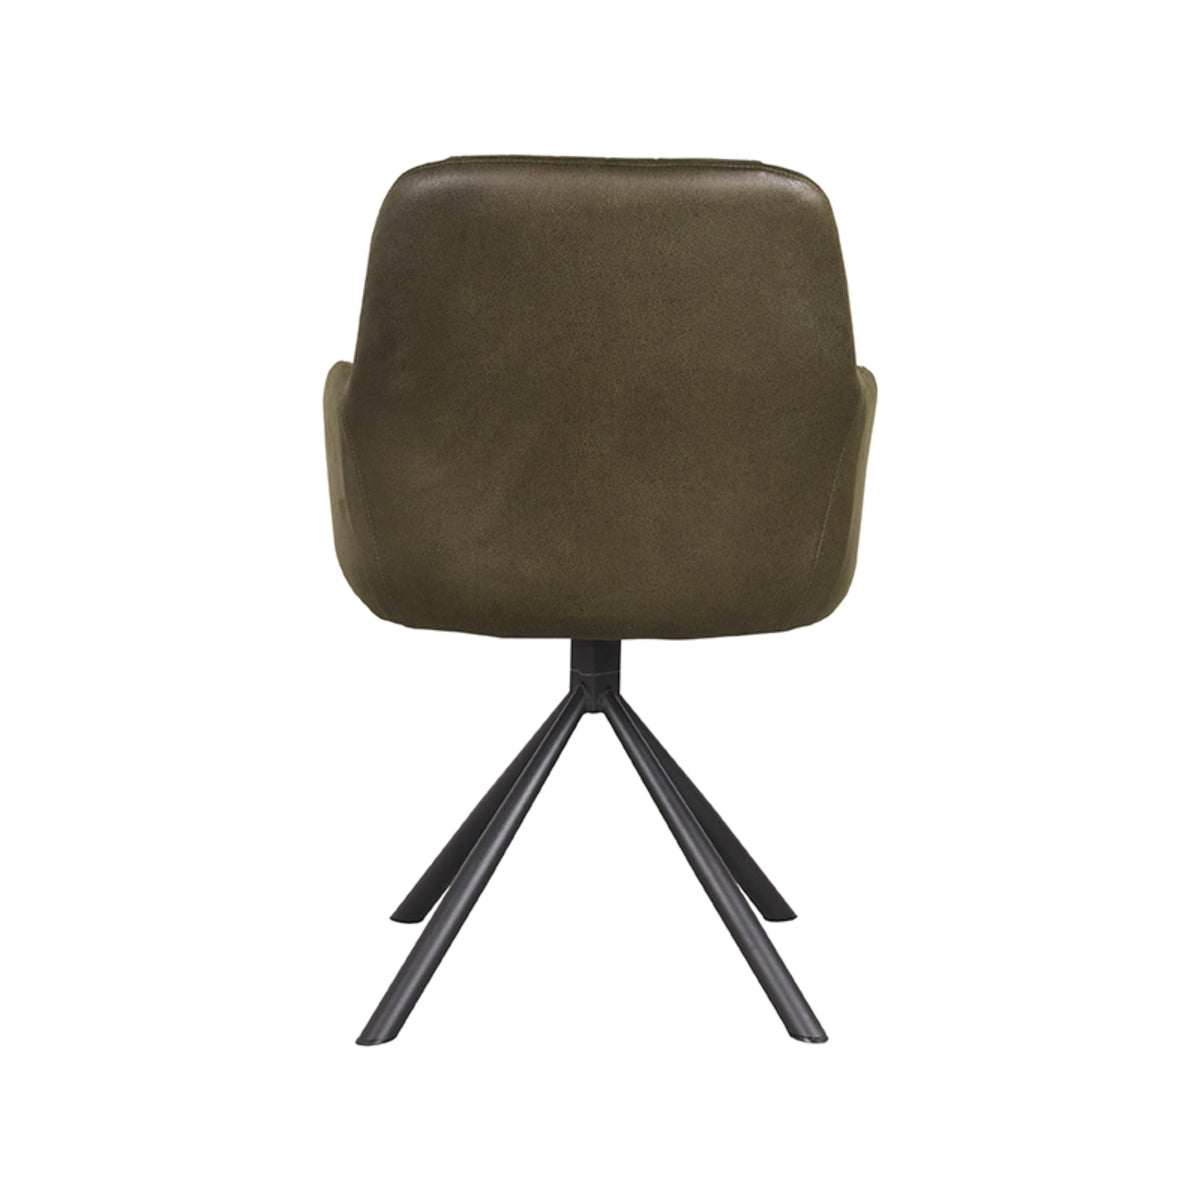 LABEL51 Novi dining room chair - Army green - Microfiber